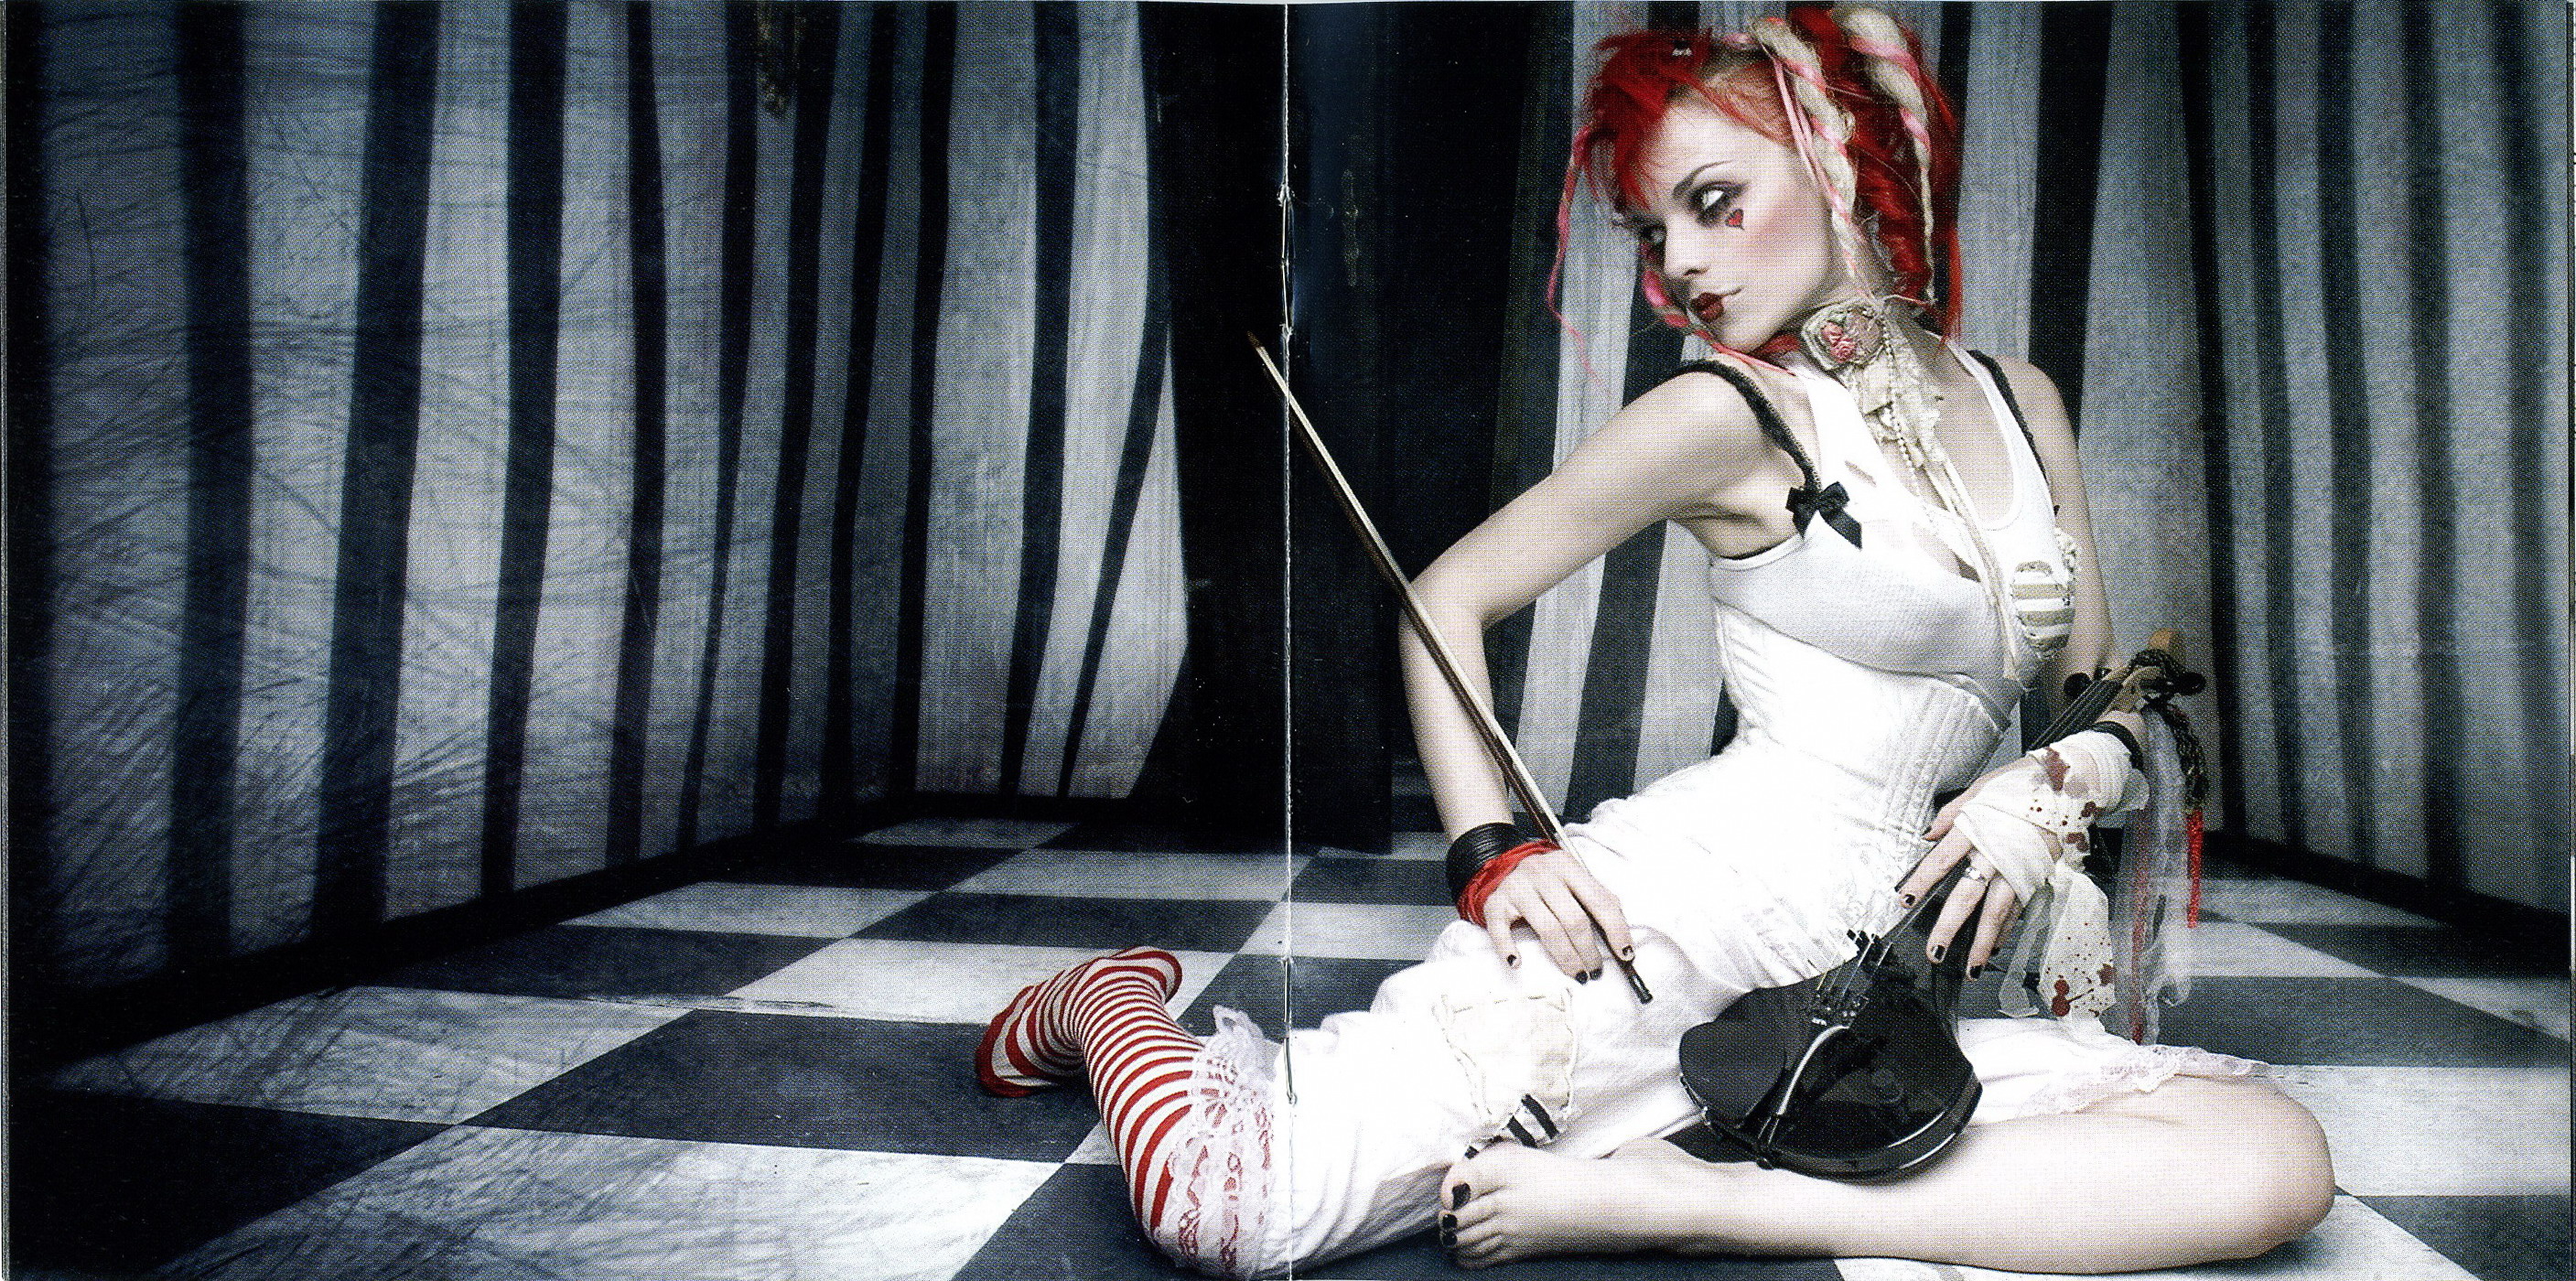 HD desktop wallpaper: Music, People, Gothic, Singer, Violin, Emilie Autumn download free picture